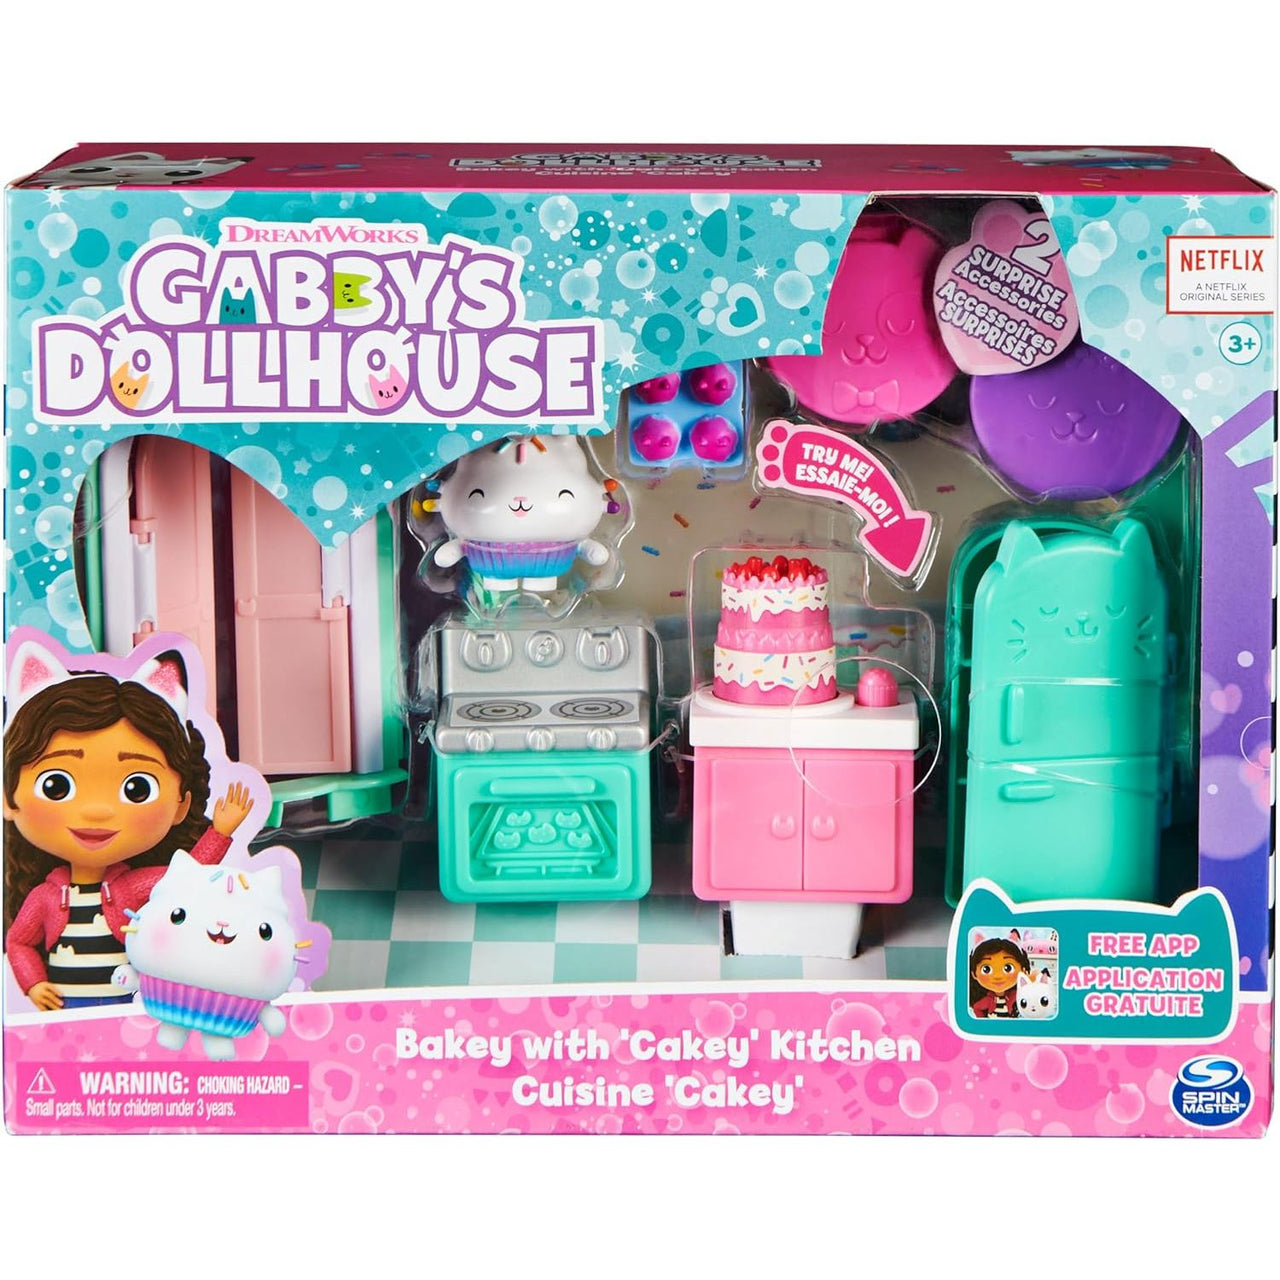 Gabby's Dollhouse Bakey with Cakey Kitchen Playset Gabby's Dollhouse